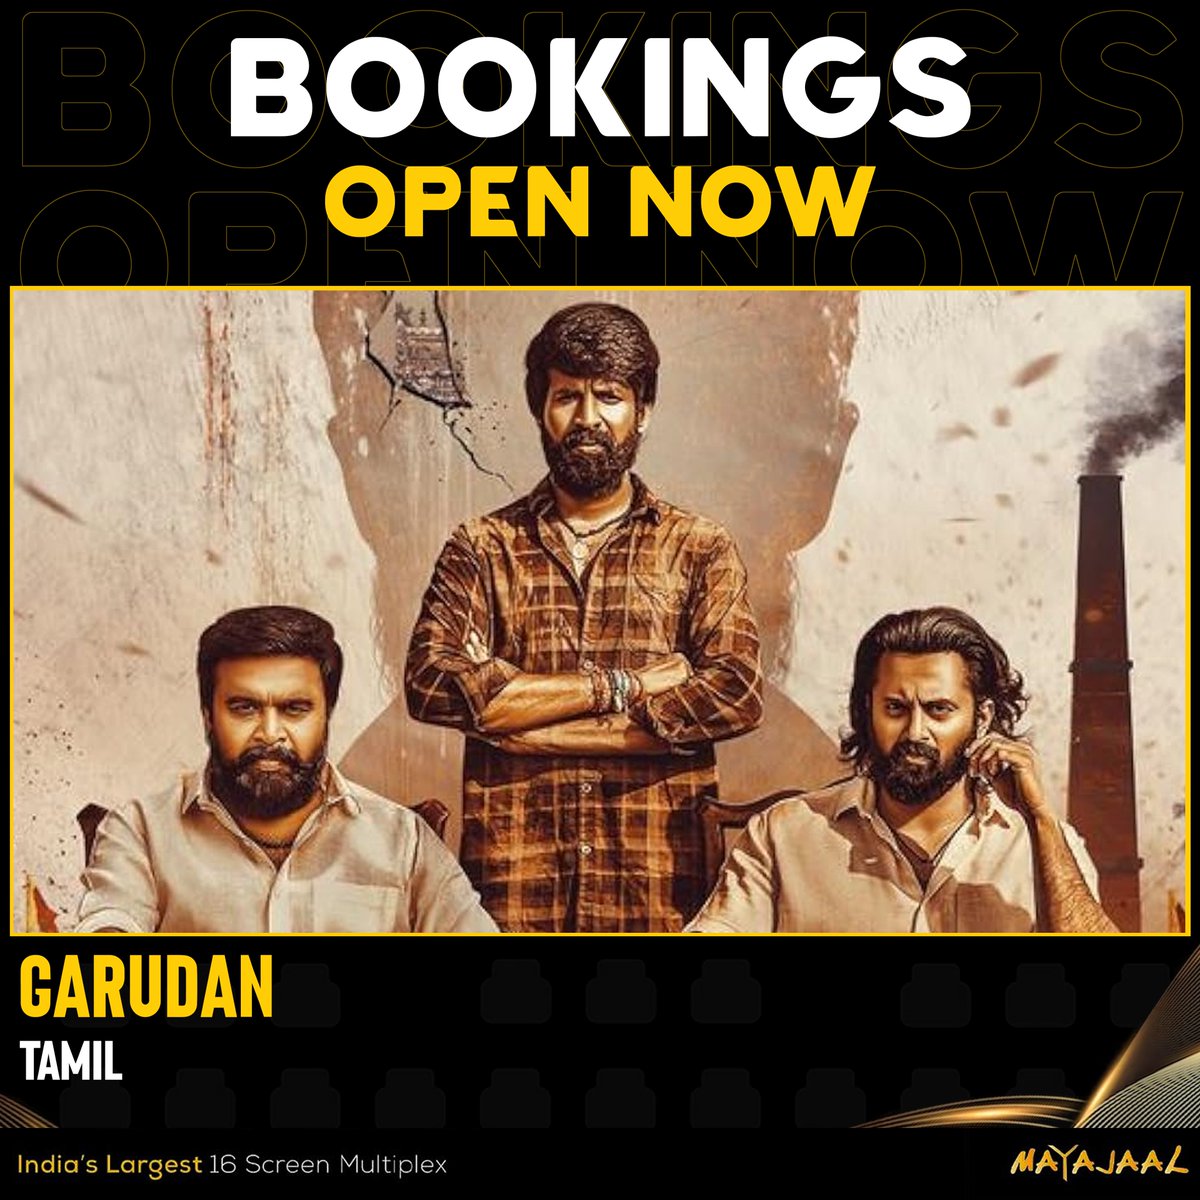 Loyalty, friendship, and a tough choice. Watch Sokkan's journey in 'Garudan'. Bookings open for #Garudan (Tamil) at #Mayajaal 🎟️bit.ly/3sVdbqD #Soori #Sasikumar #Unnimukundan #RSDuraiSenthilkumar #Vetrimaran